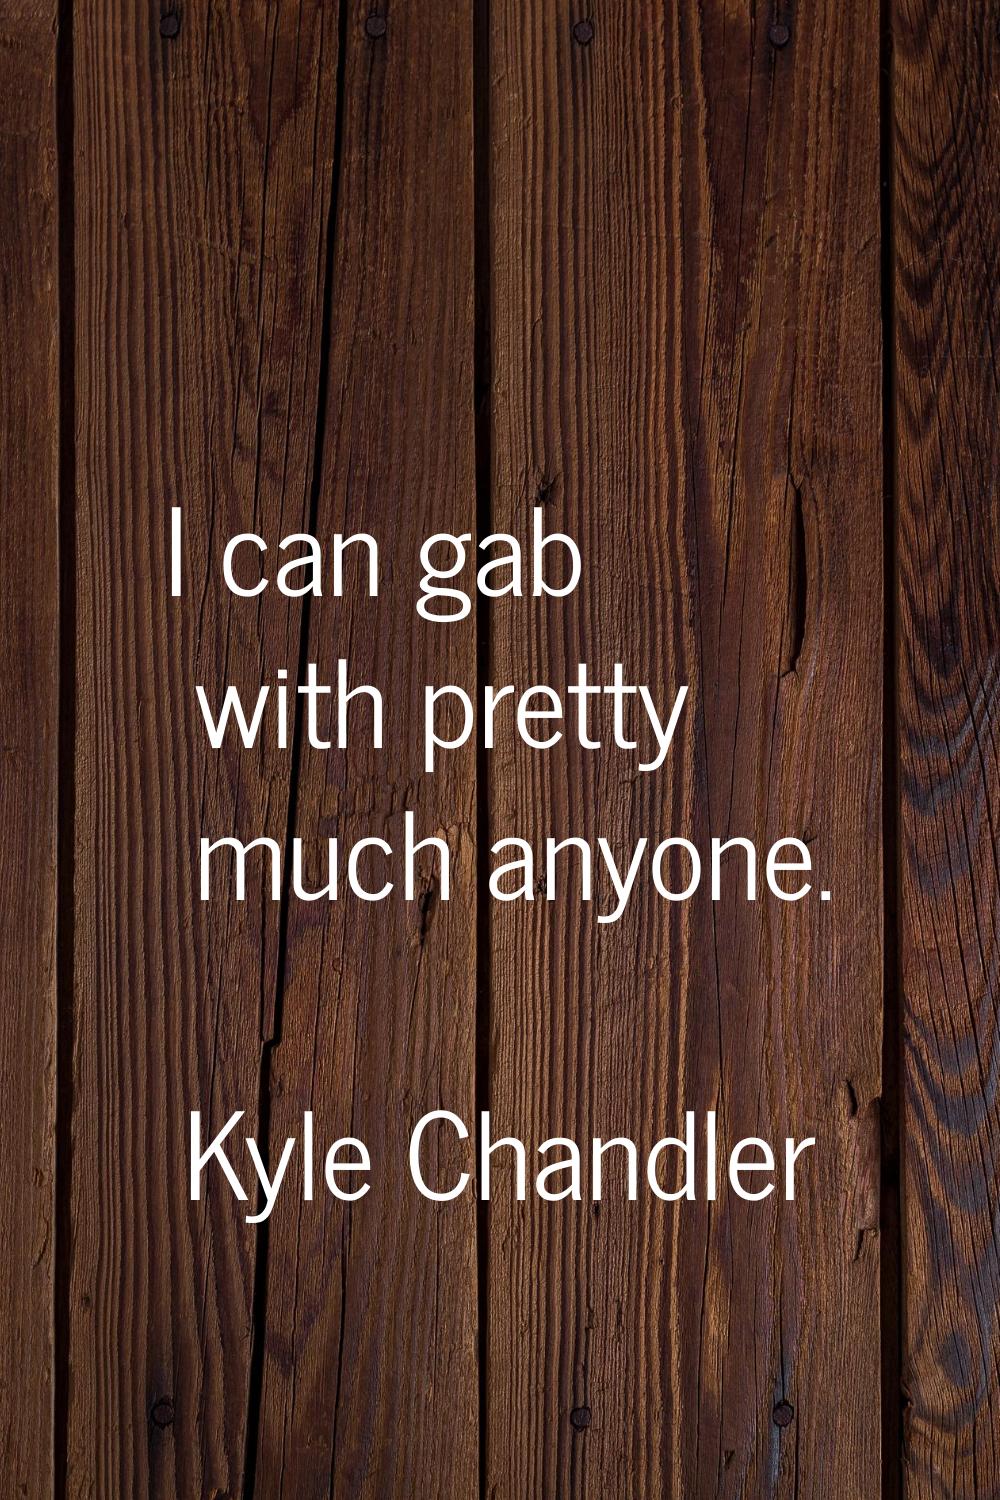 I can gab with pretty much anyone.